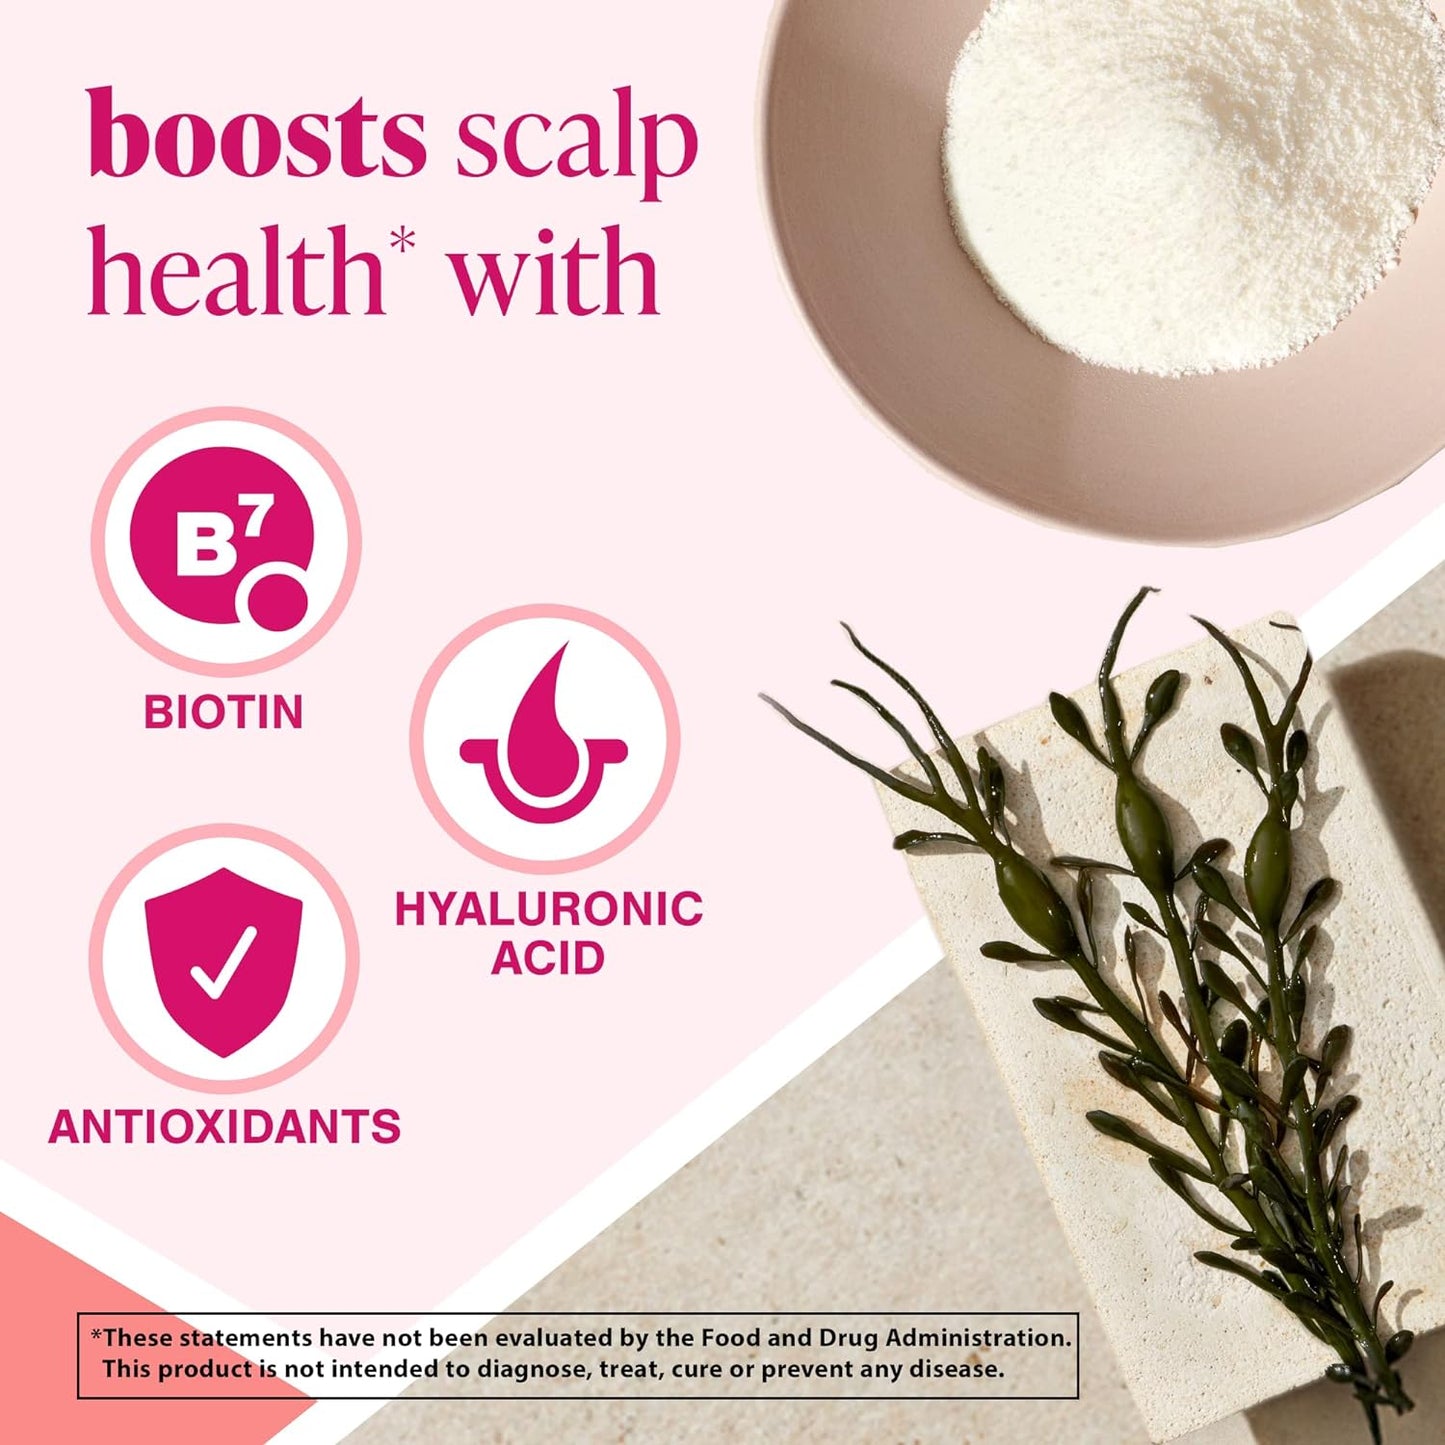 boost scalp health with biotin, hyaluronic acid, and antioxidants